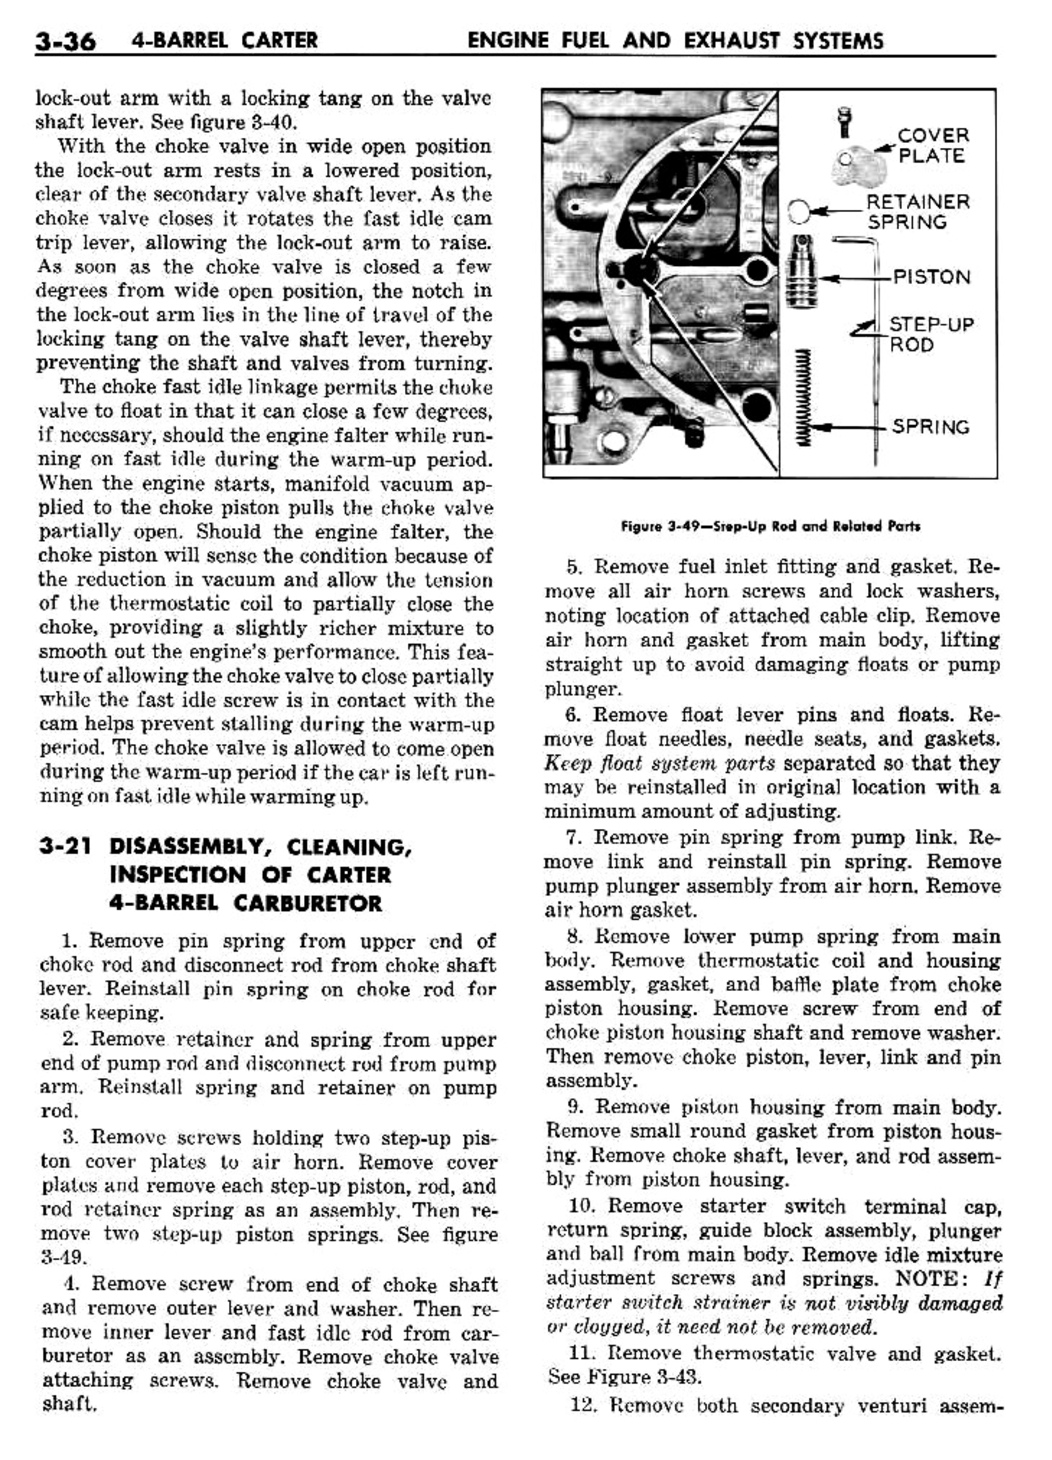 n_04 1960 Buick Shop Manual - Engine Fuel & Exhaust-036-036.jpg